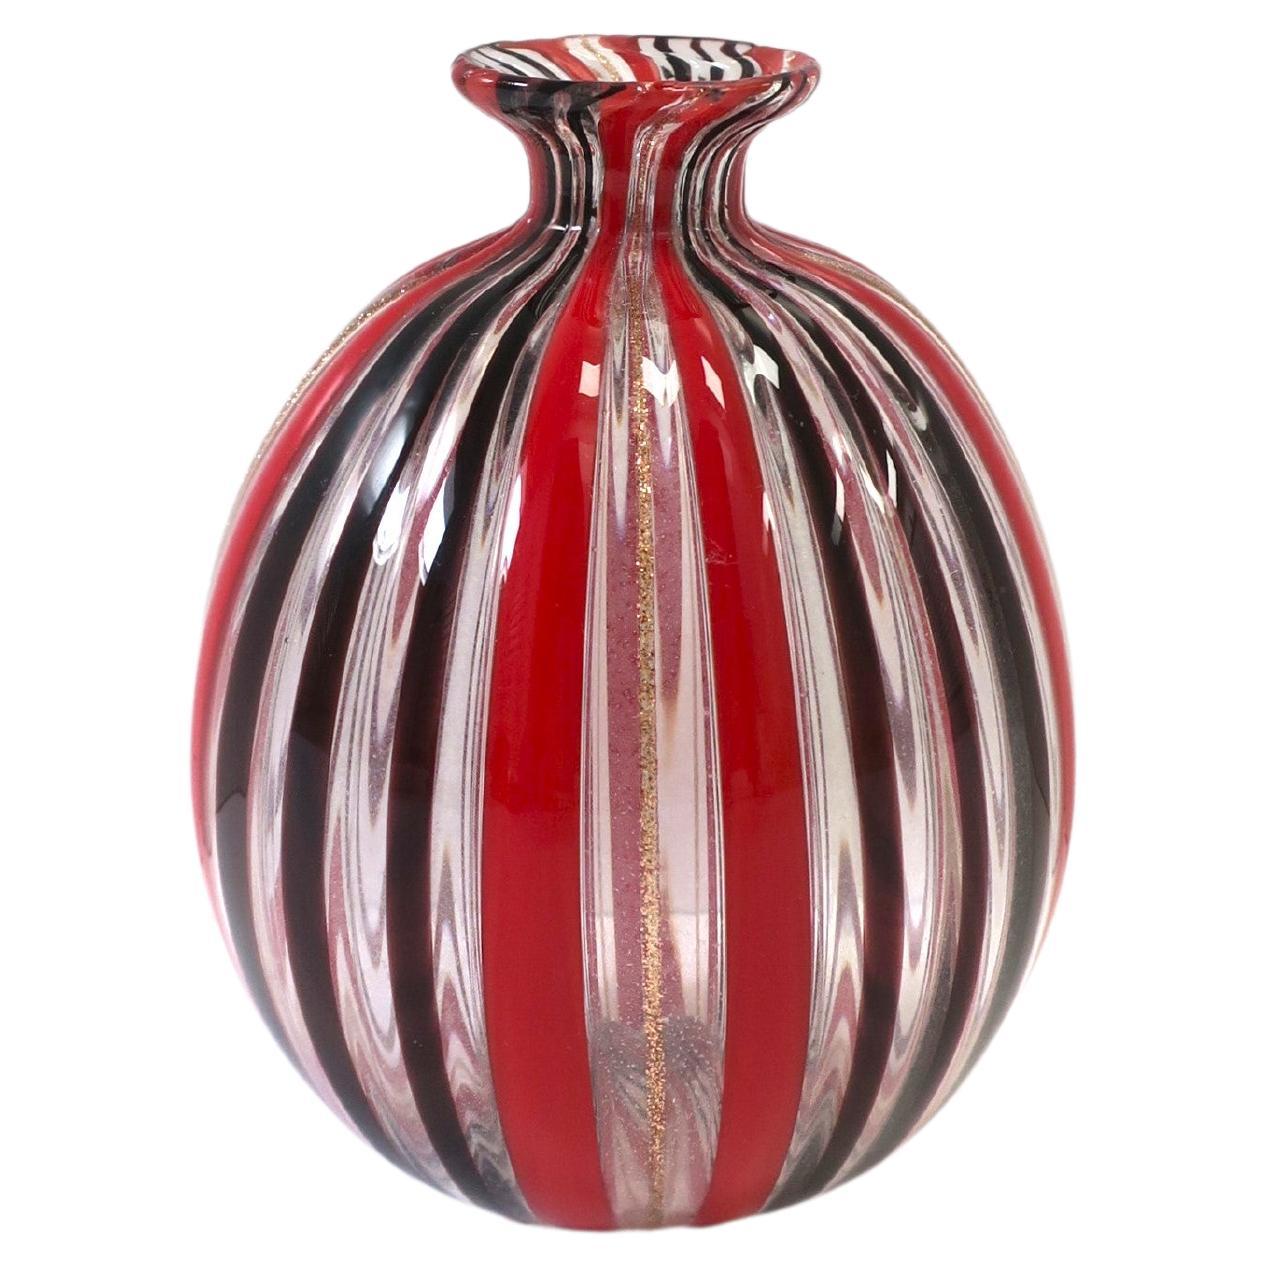 Vase en verre d'art italien rouge et Brown, petit